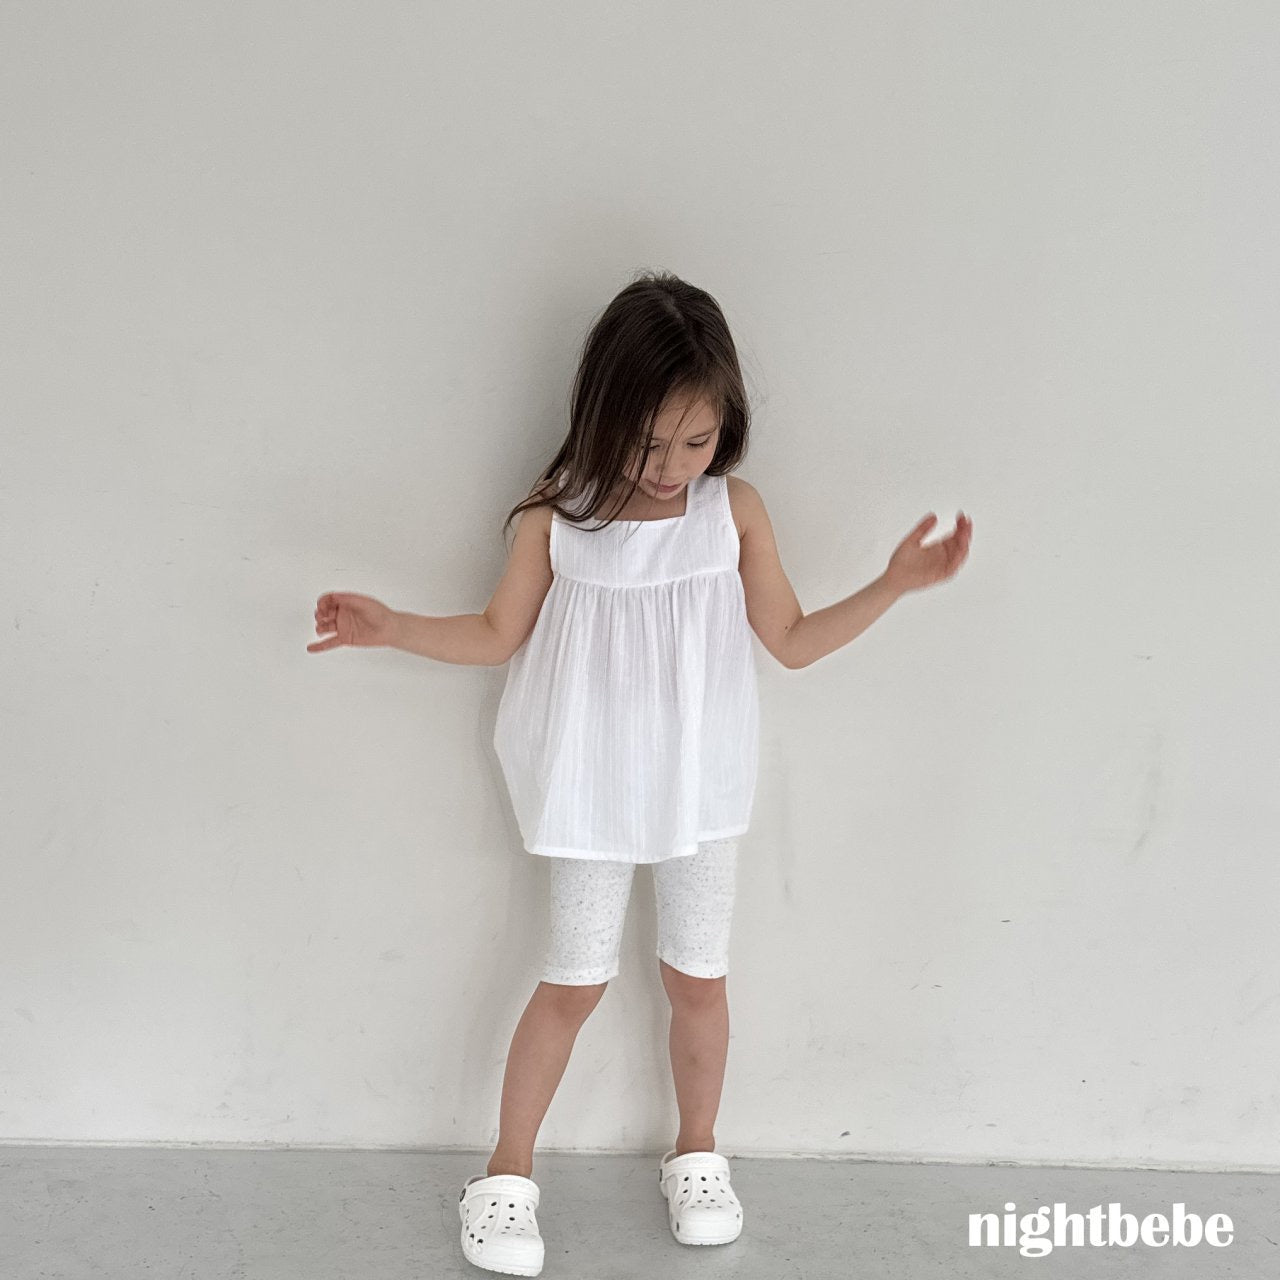 Nightbebe Army blouse (kids 80-120cm)